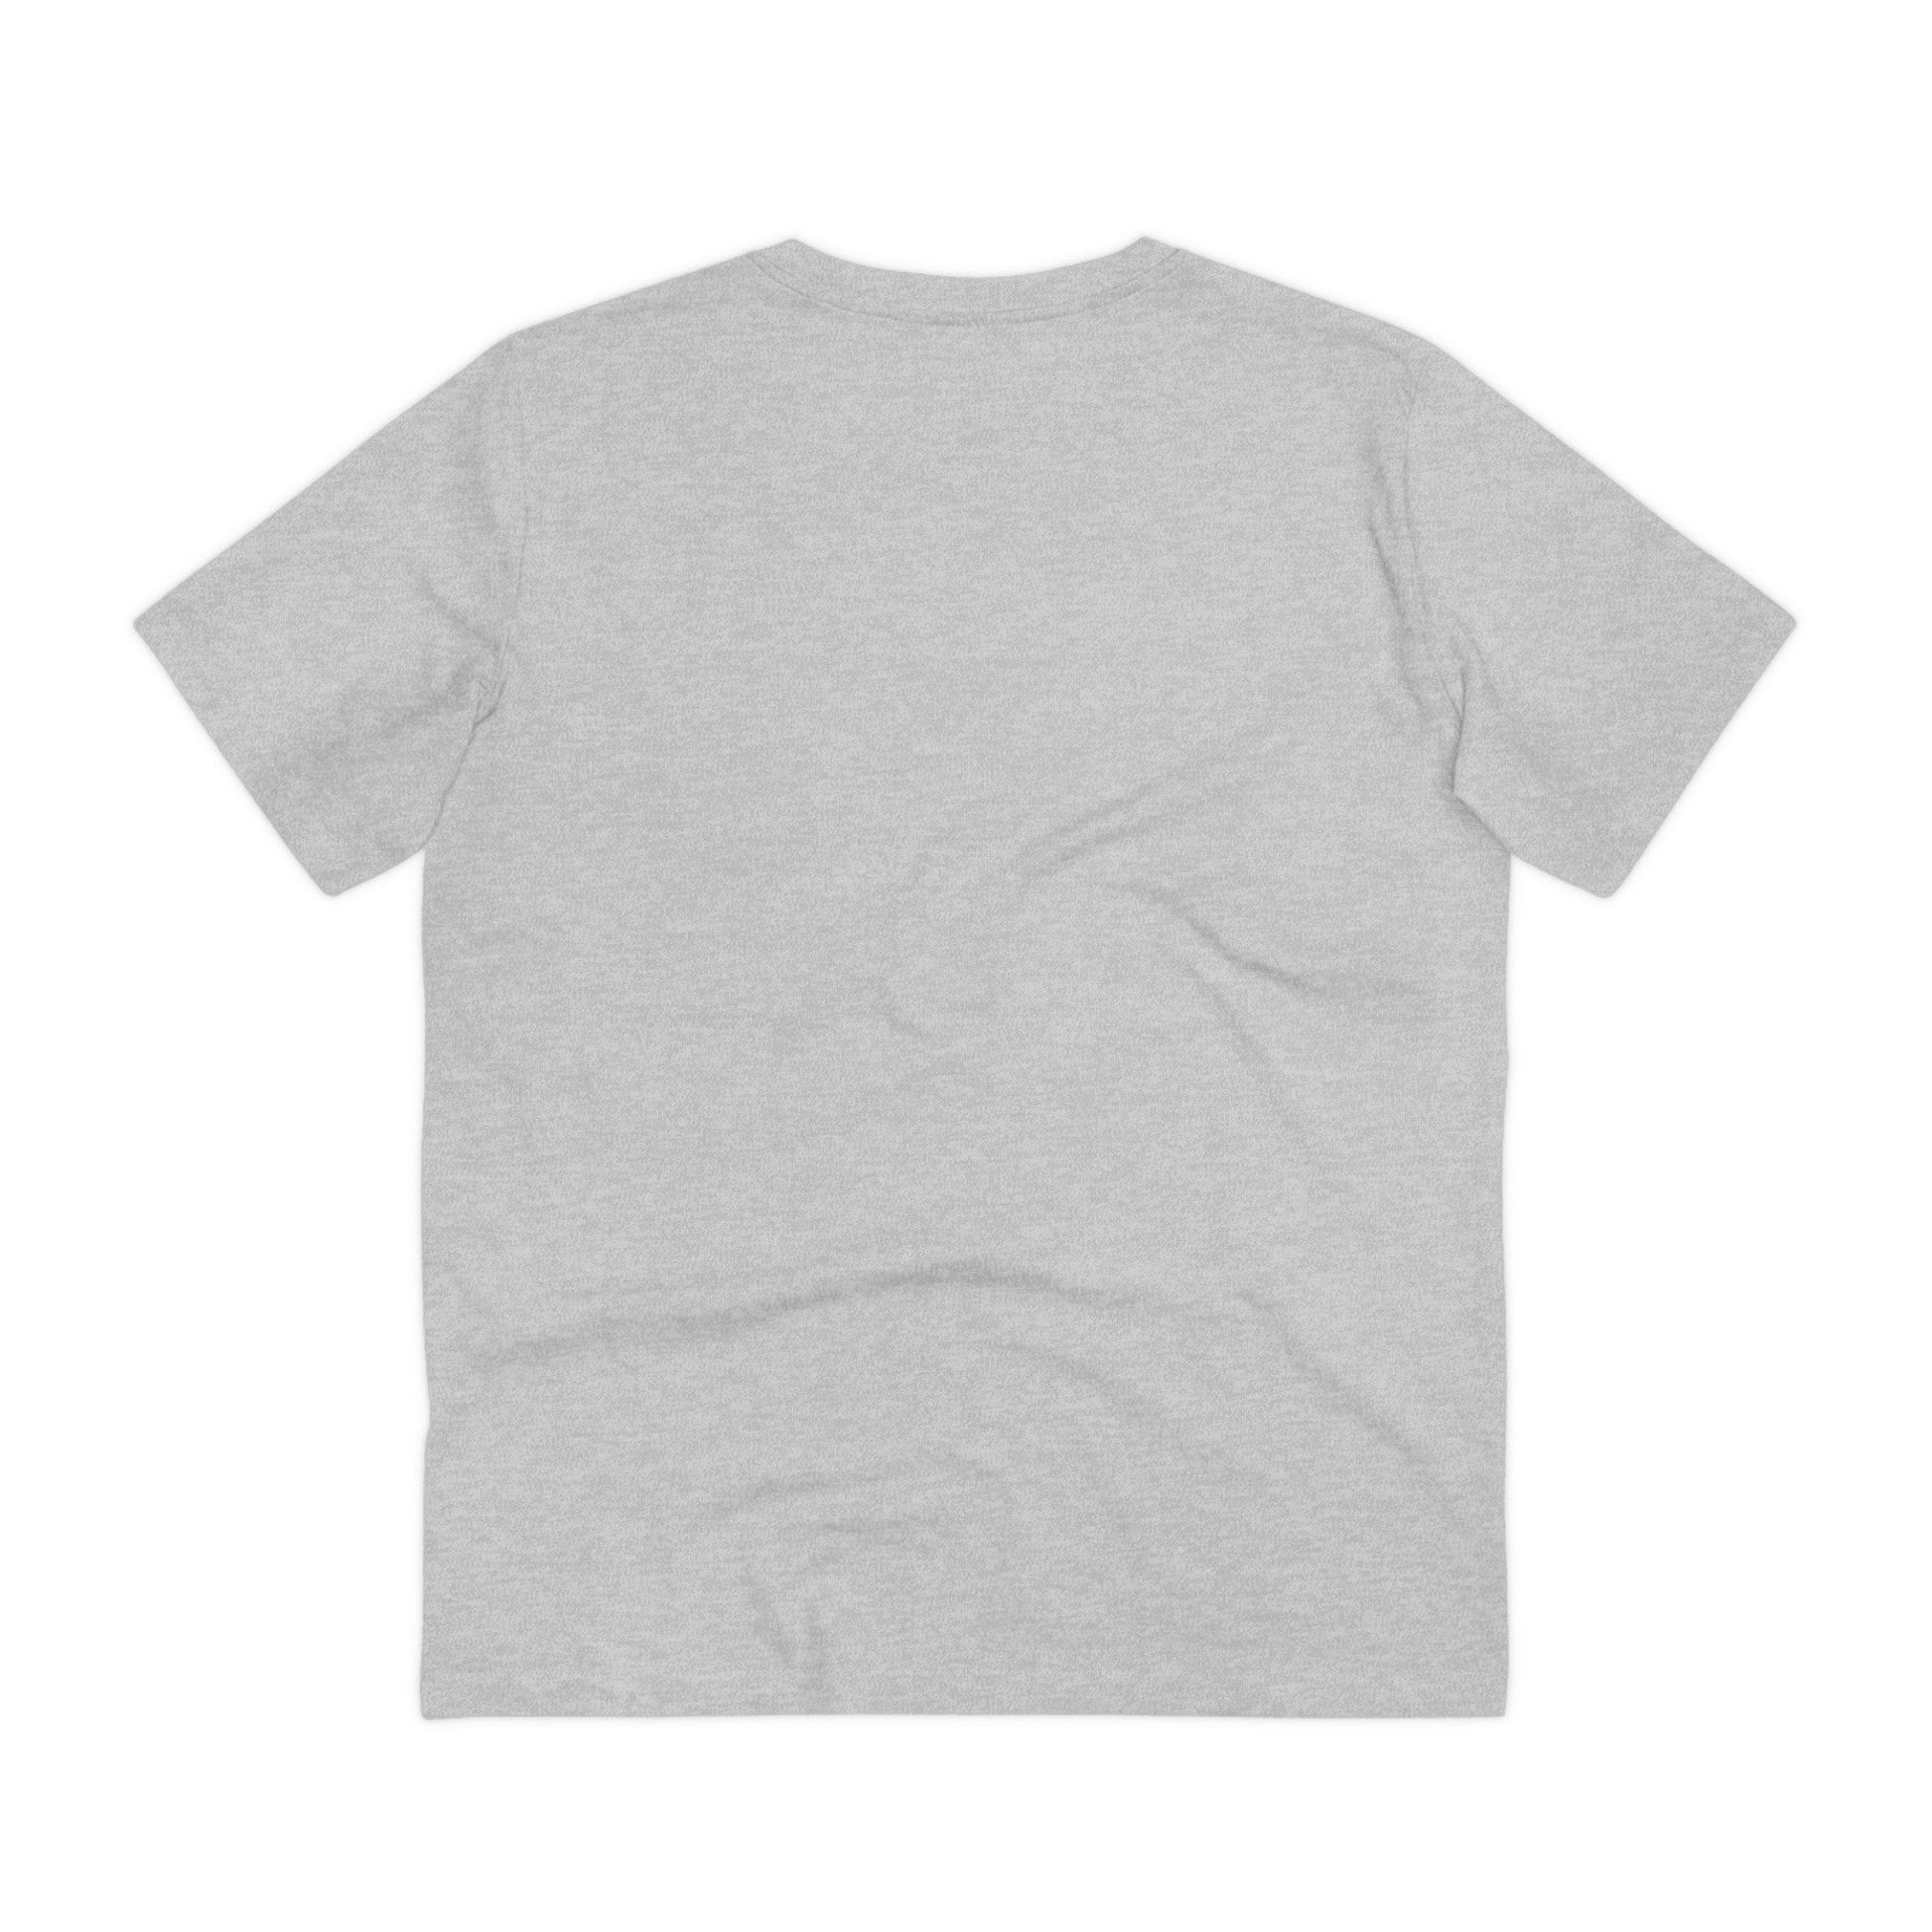 Printify T-Shirt Dream Chasing - Streetwear - Gods Way - Front Design